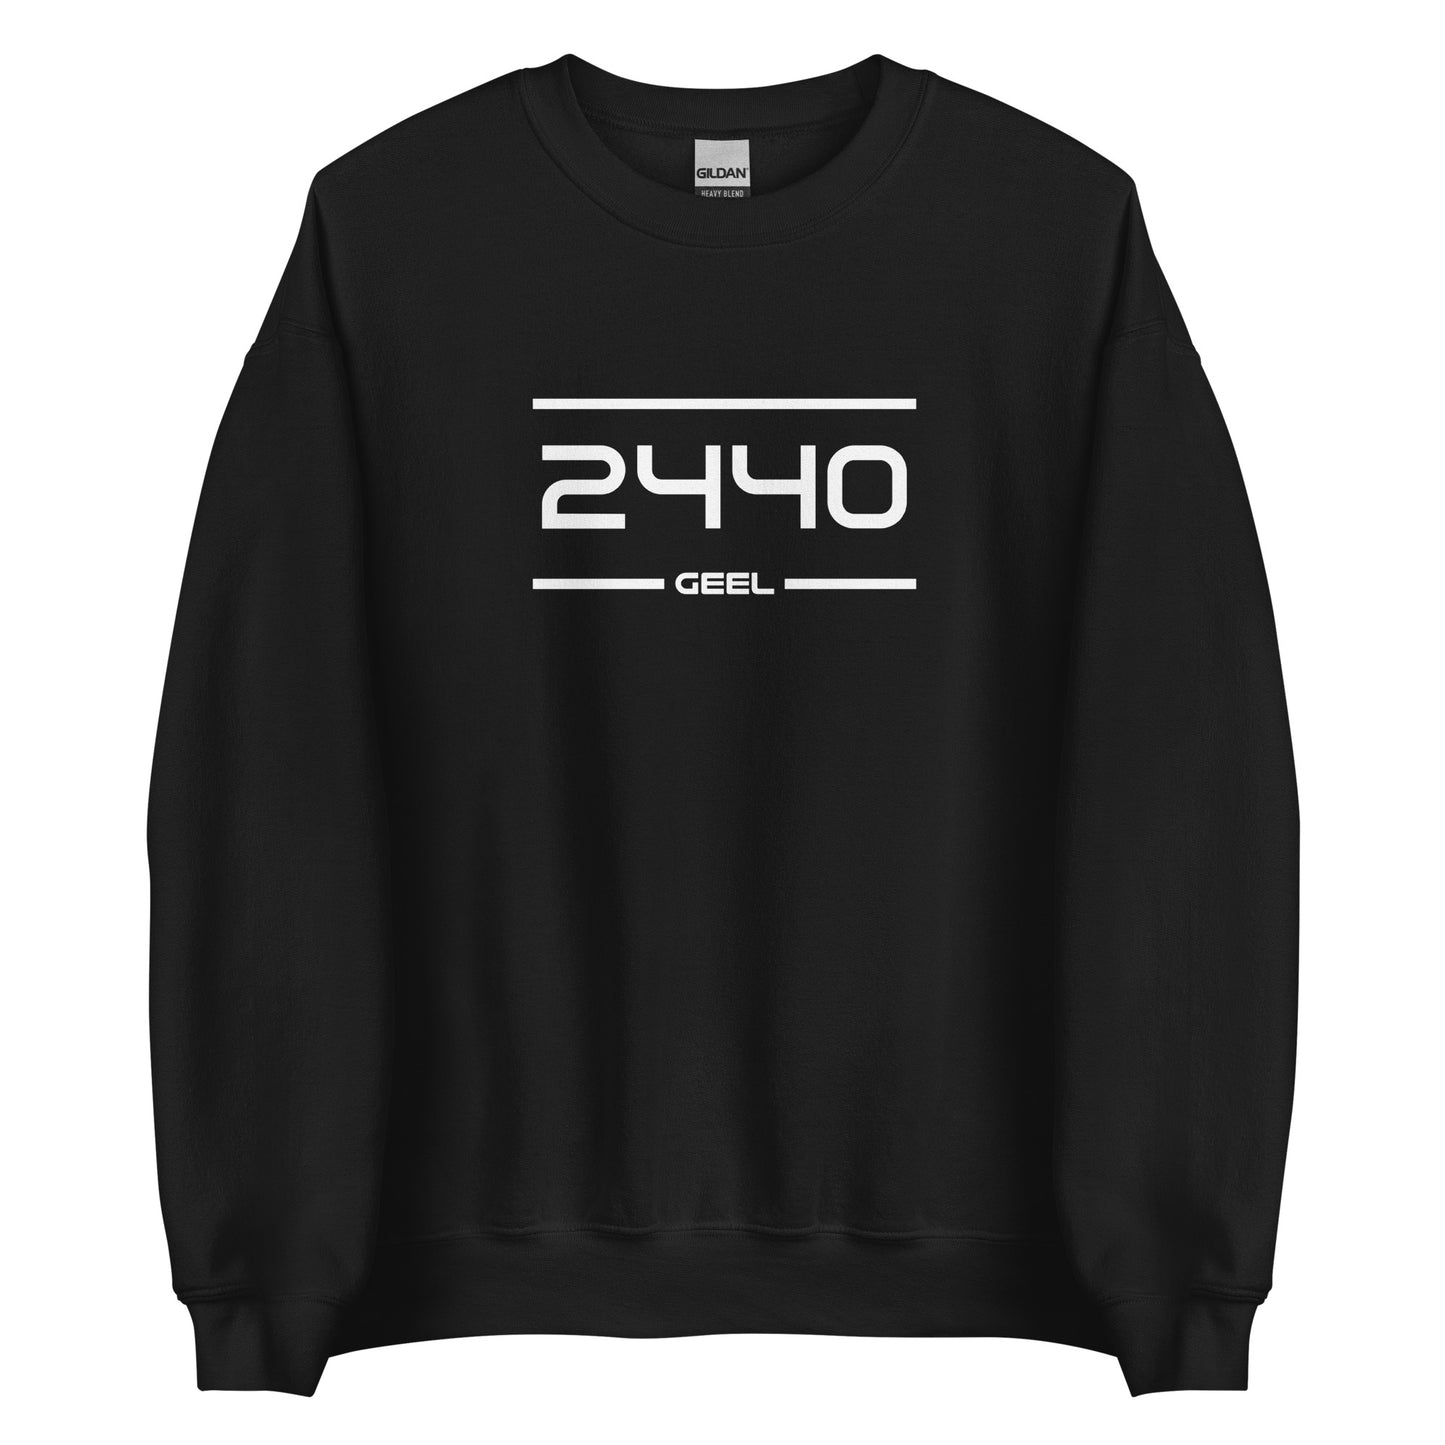 Sweater - 2440 - Geel (M/V)